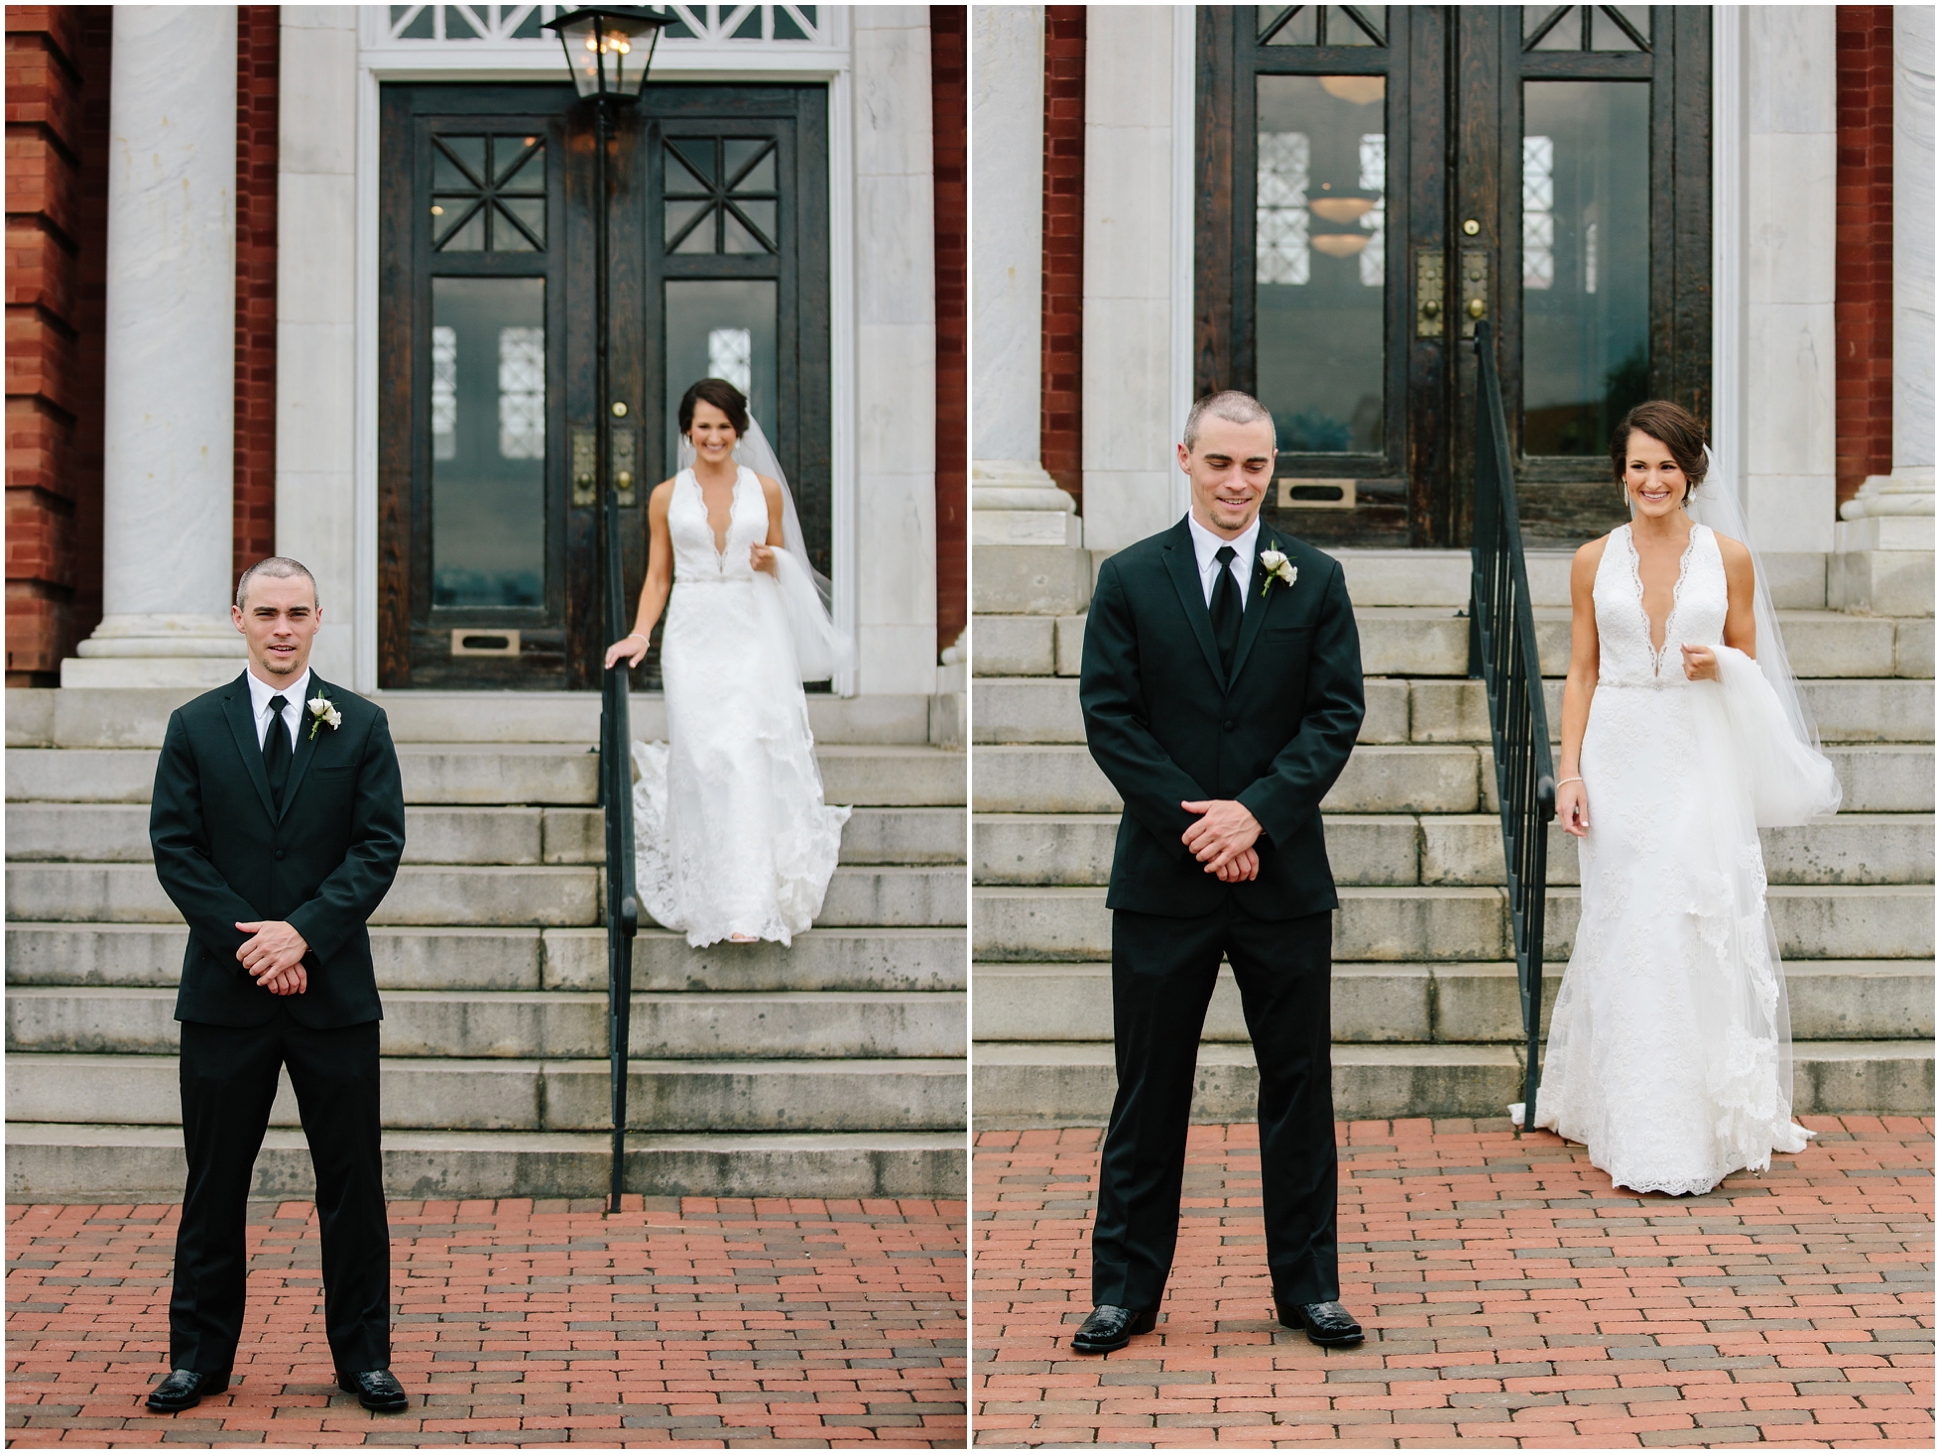 A Modern Southern Magnolia Inspired Wedding | Dublin, Georgia Wedding Photographers | Two Chics Photography | www.twochicsphotography.com